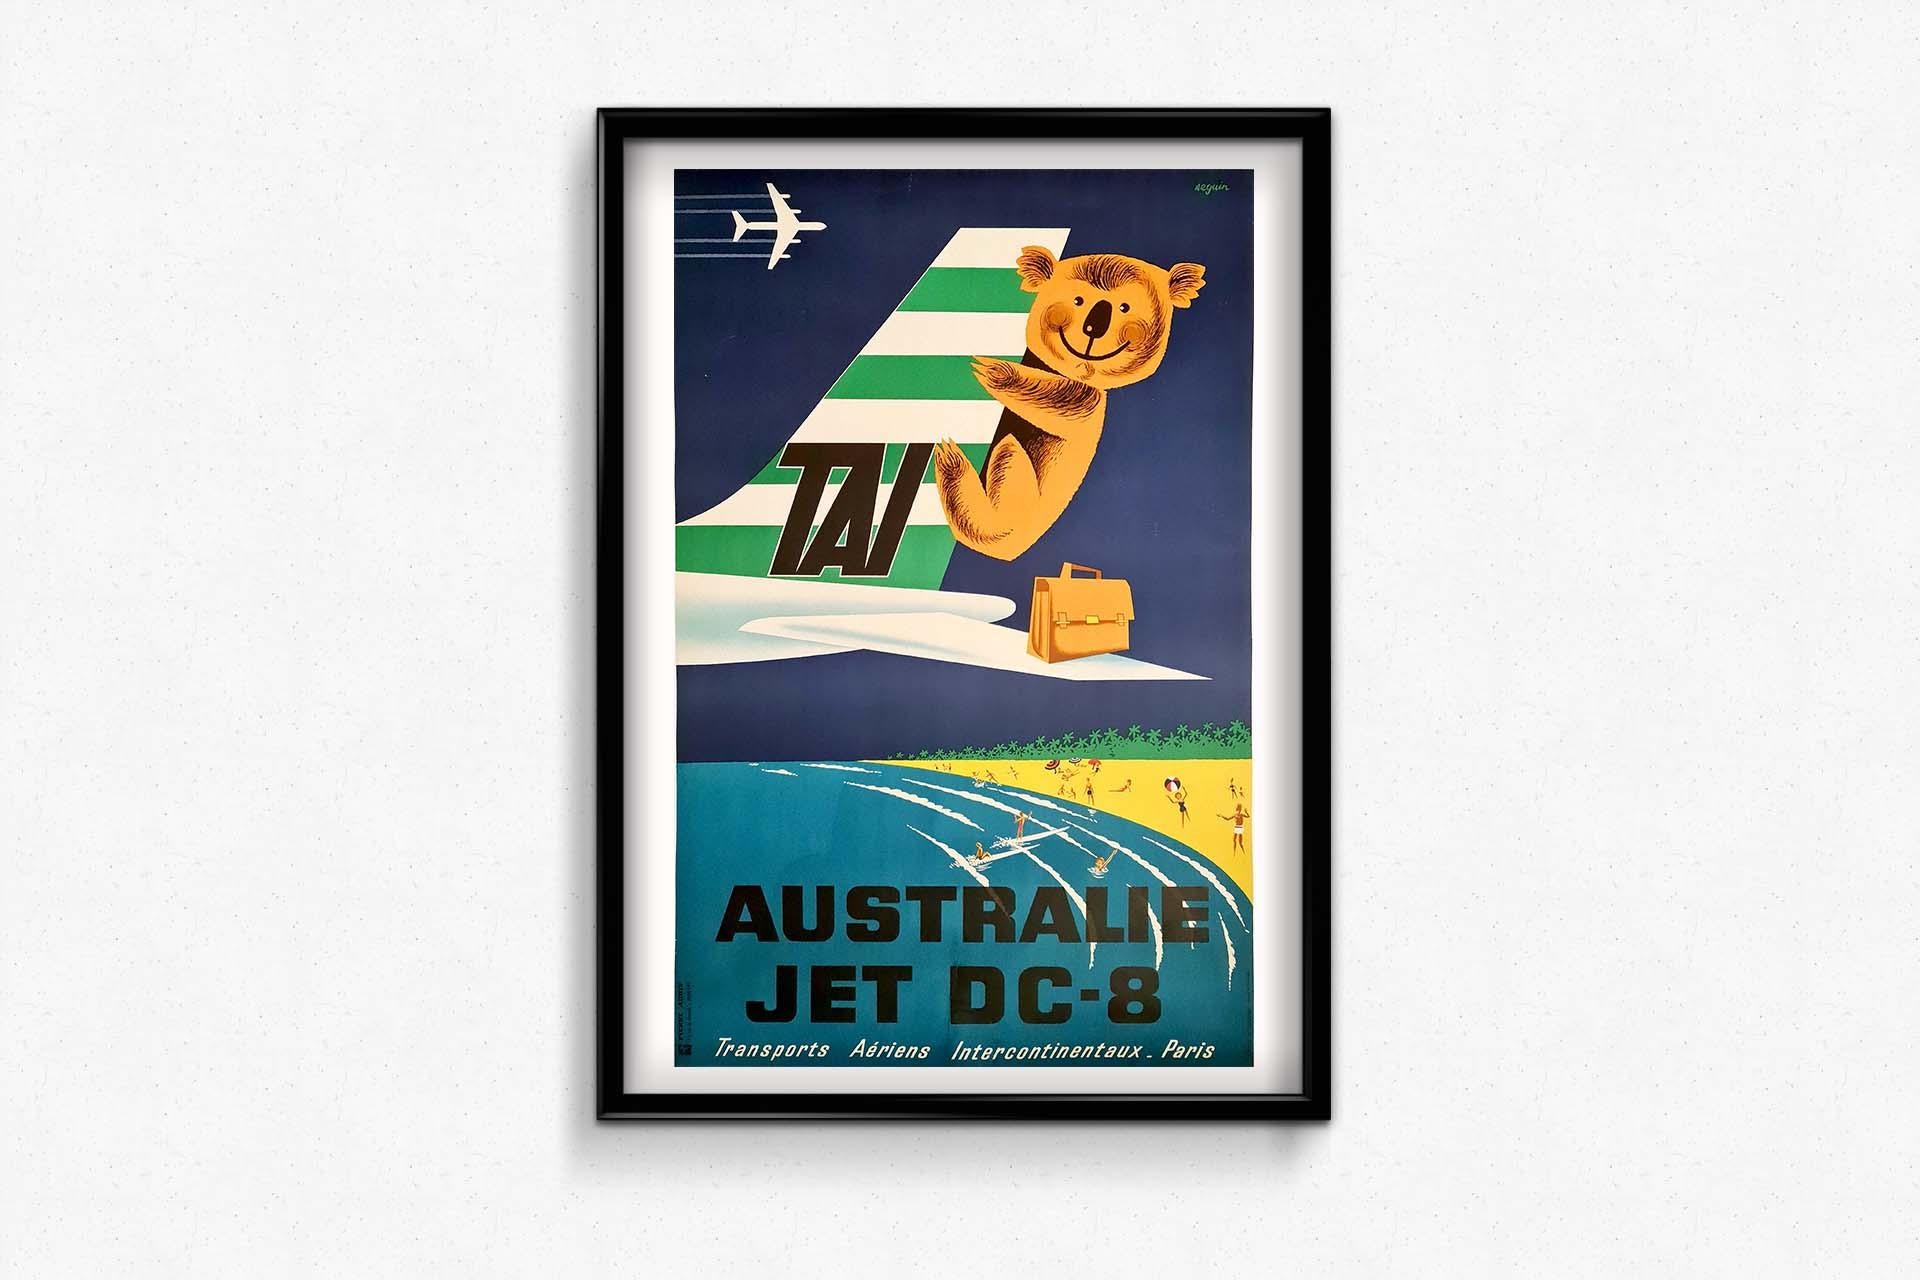 1963 Original Poster by Seguin TAI  Australia Jet DC-8 - Airlines - Tourism  2